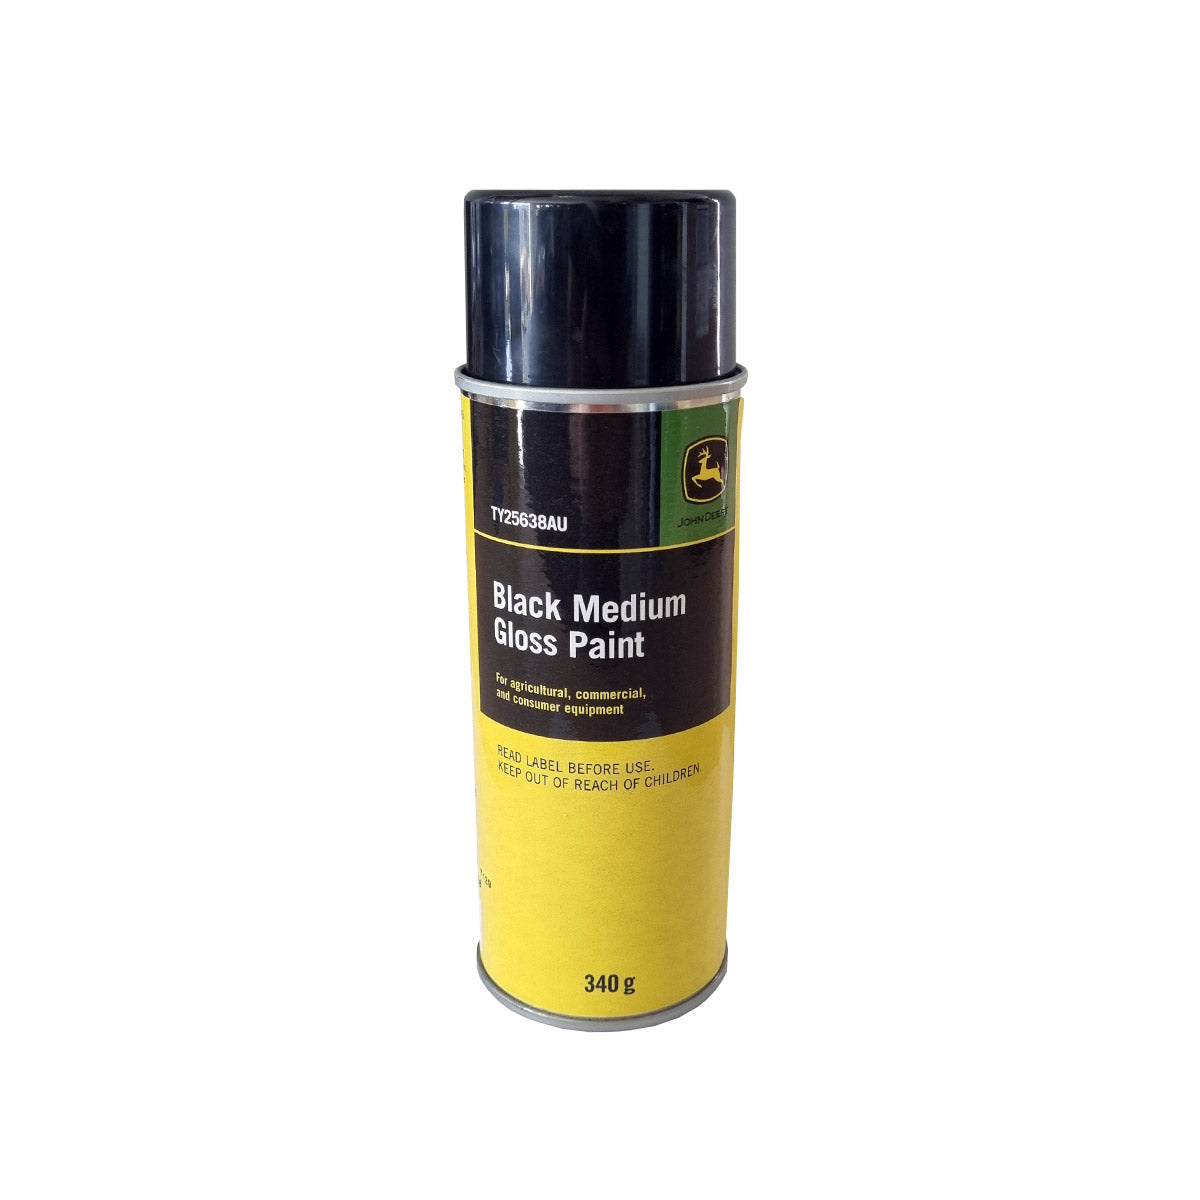 John Deere Medium Gloss Black Paint - 340g Spray Can